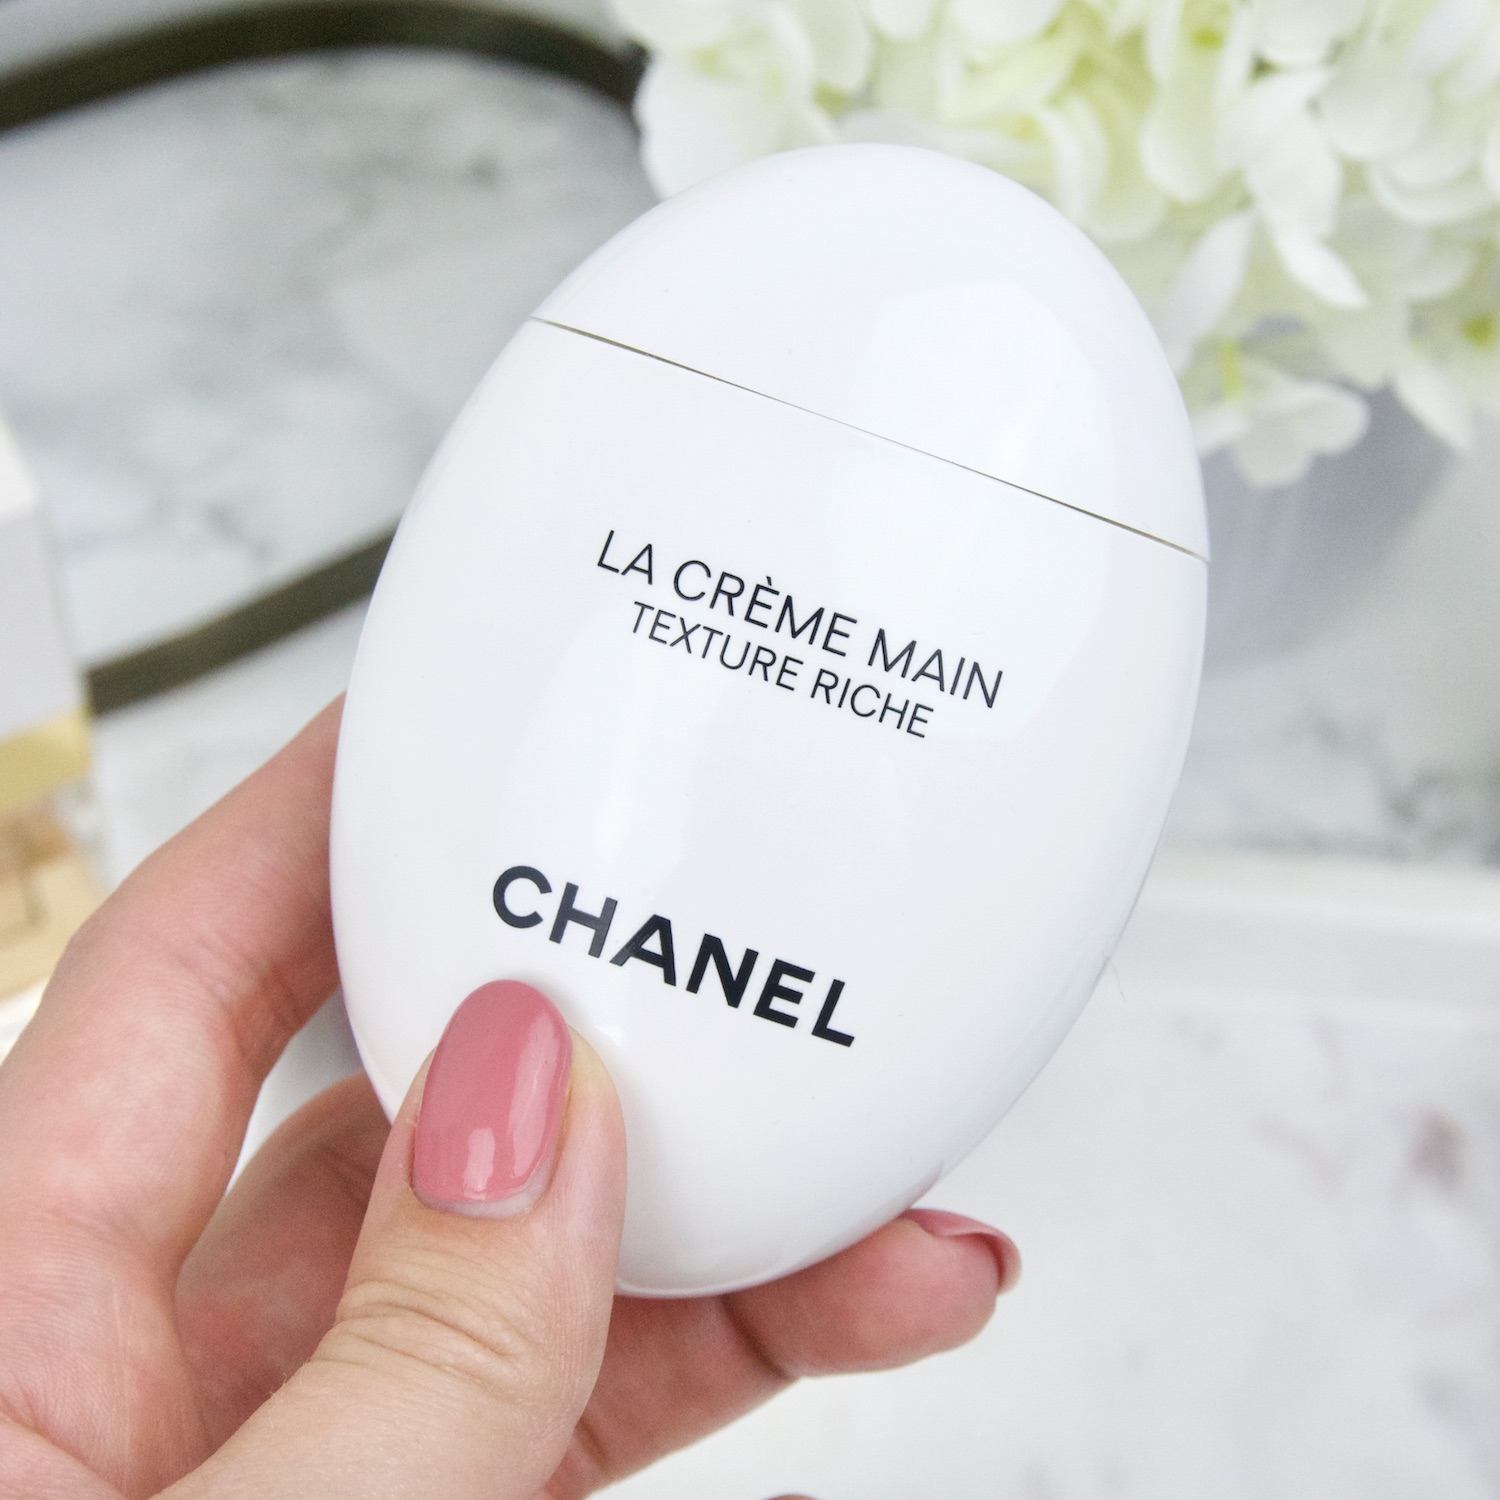 productfoto Chanel La Crème Main Texture Riche